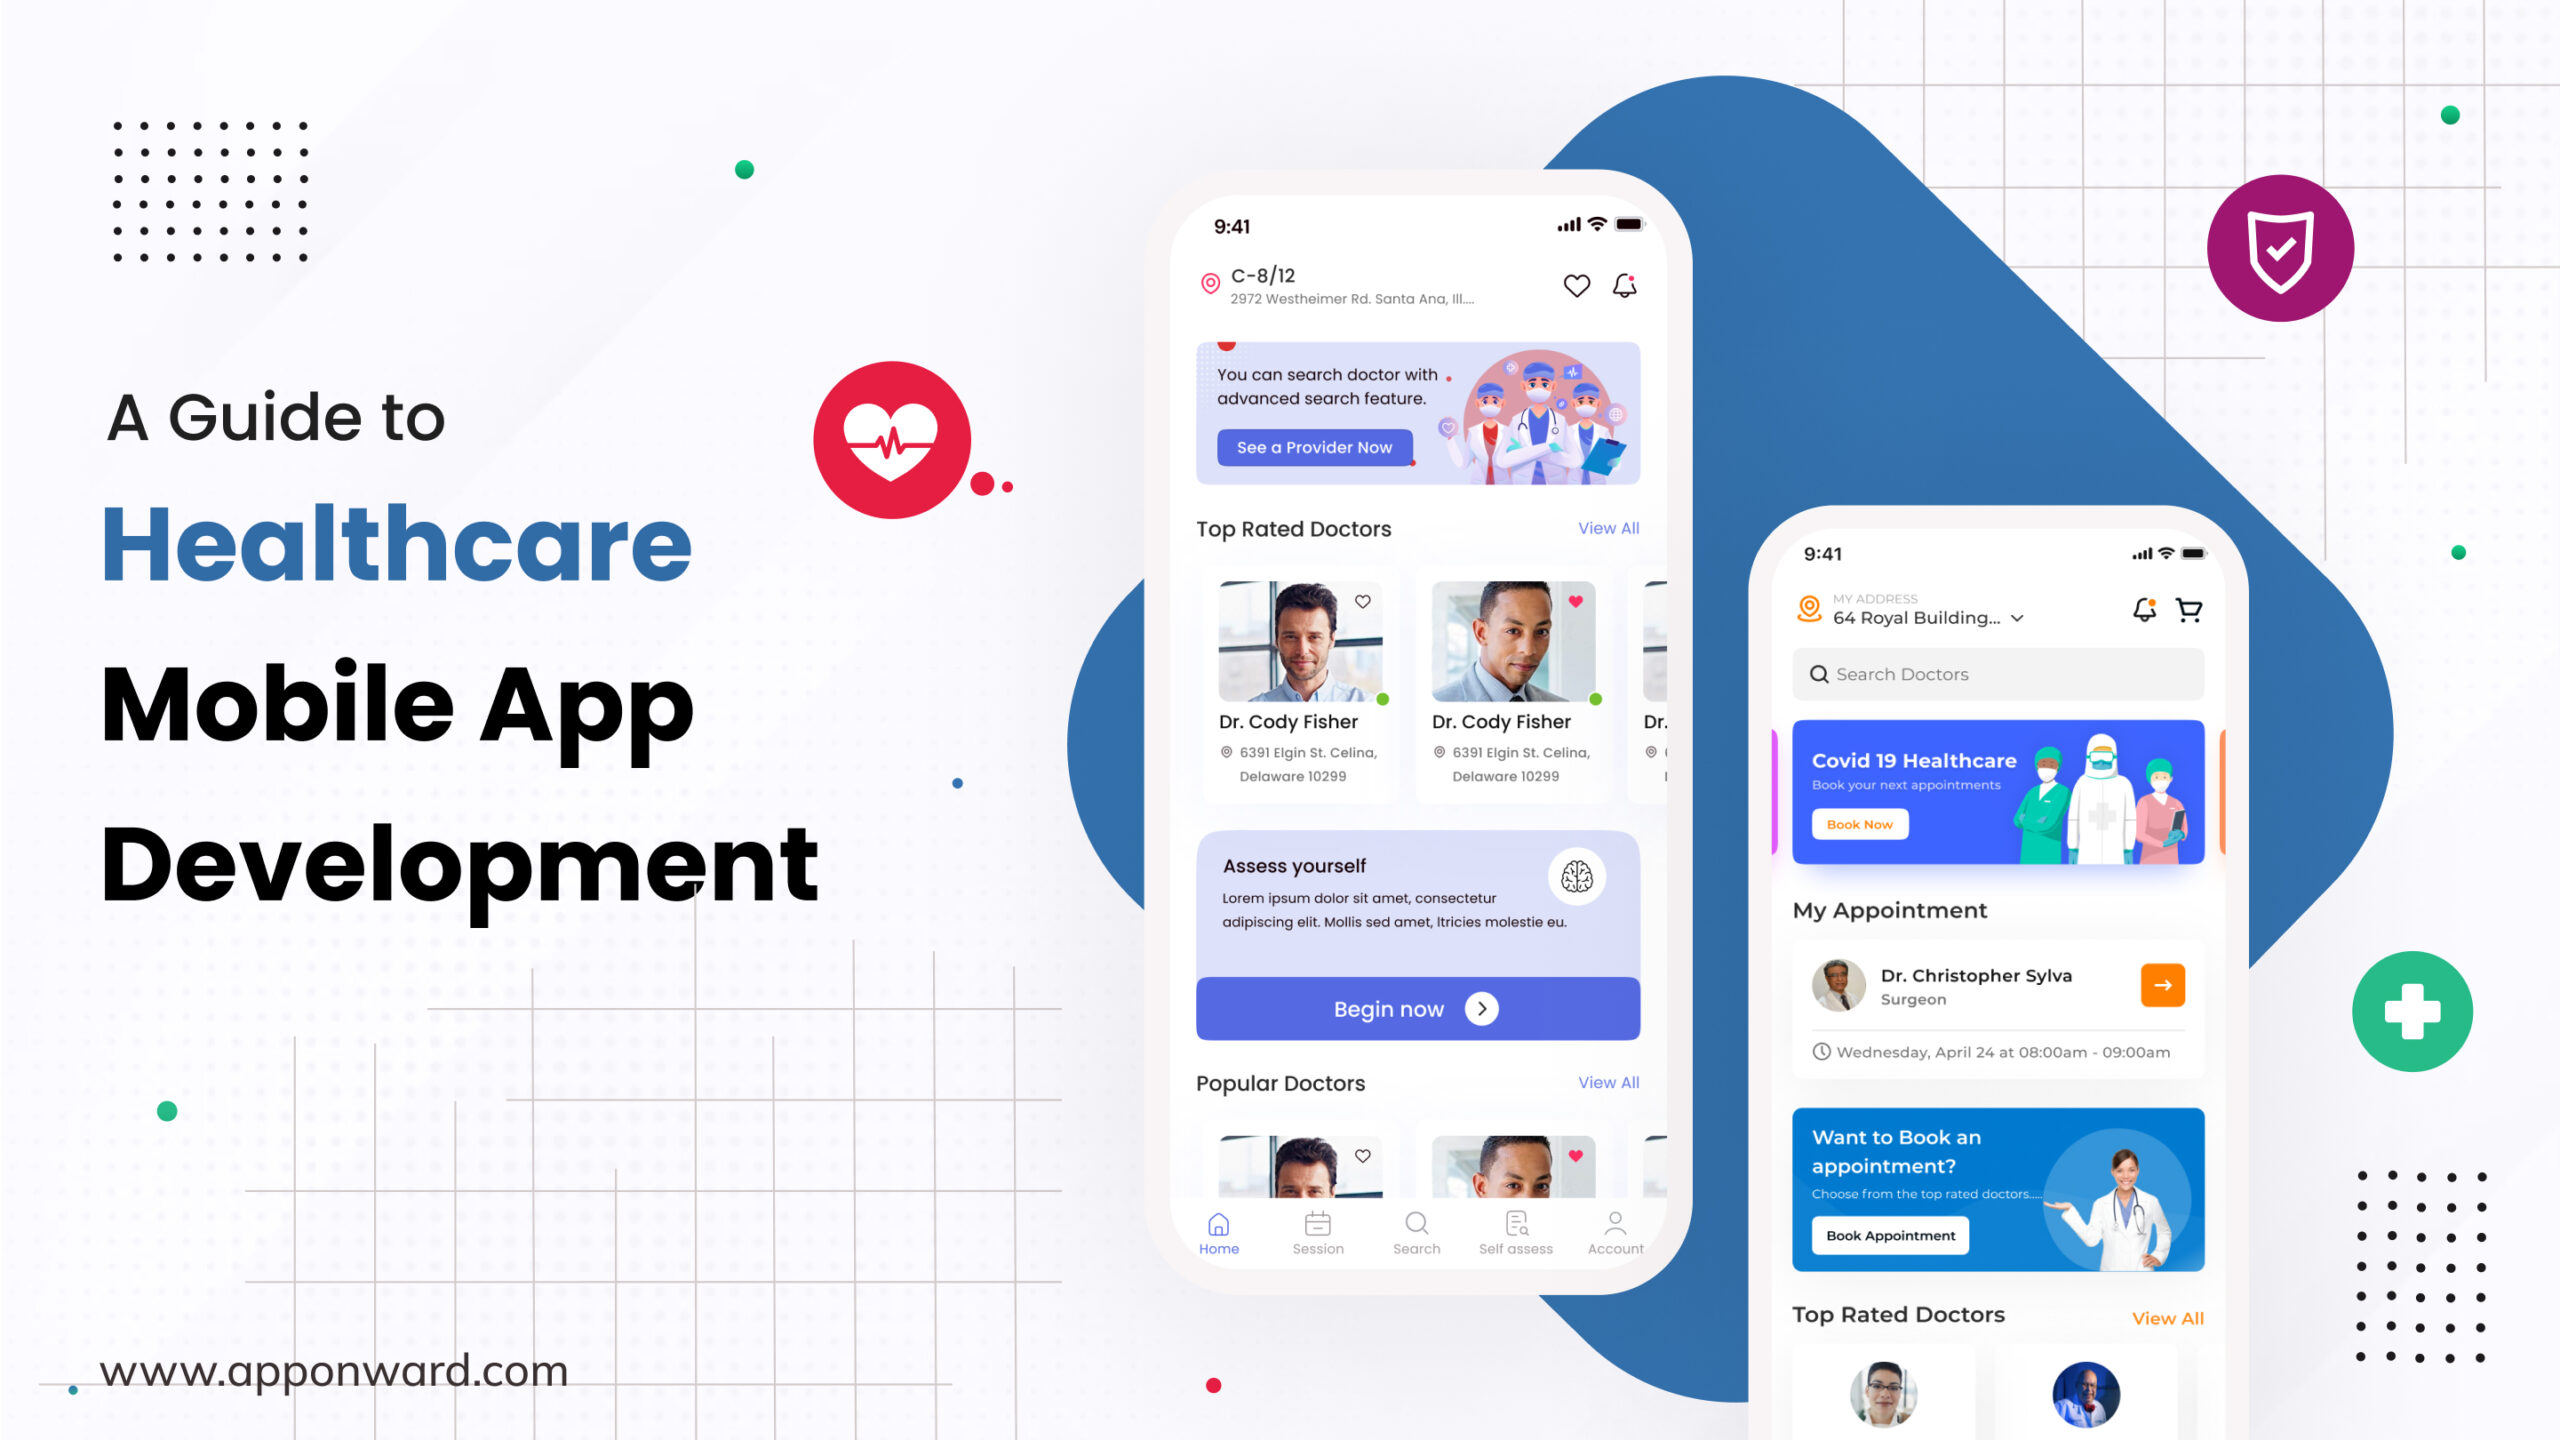 A Guide to Healthcare Mobile App Development